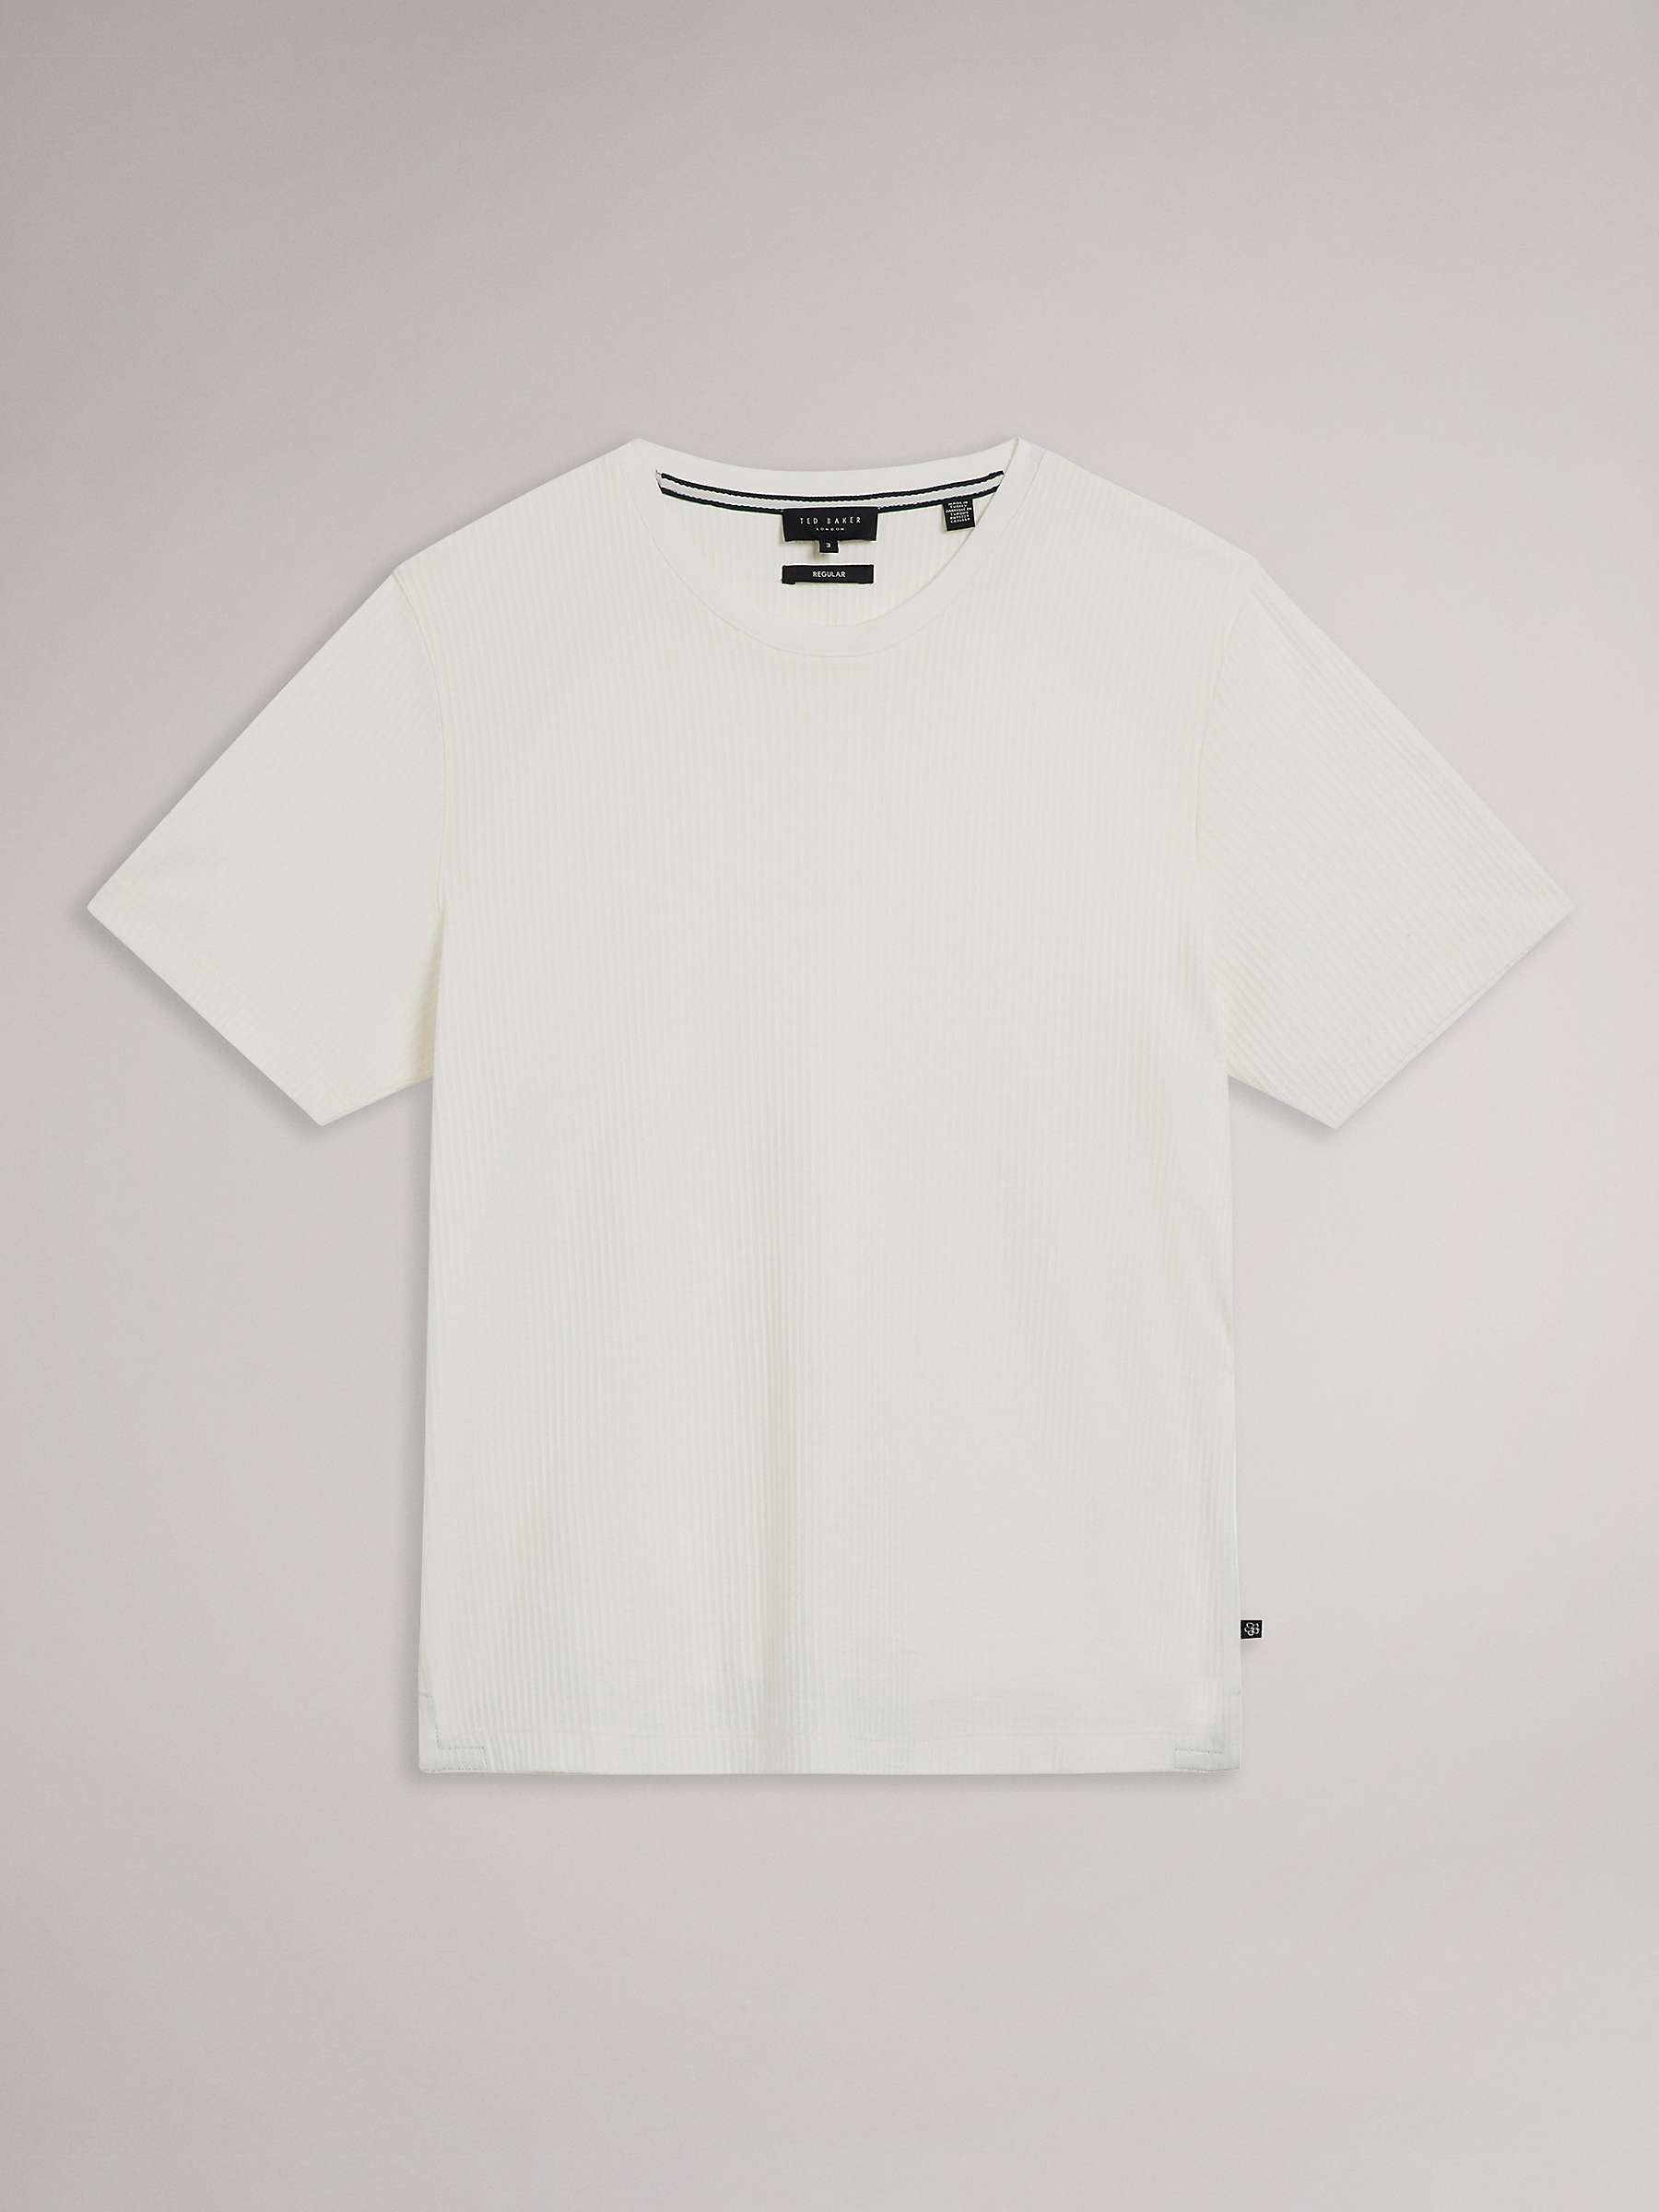 Ted Baker Rakes Textured T-Shirt, White at John Lewis & Partners